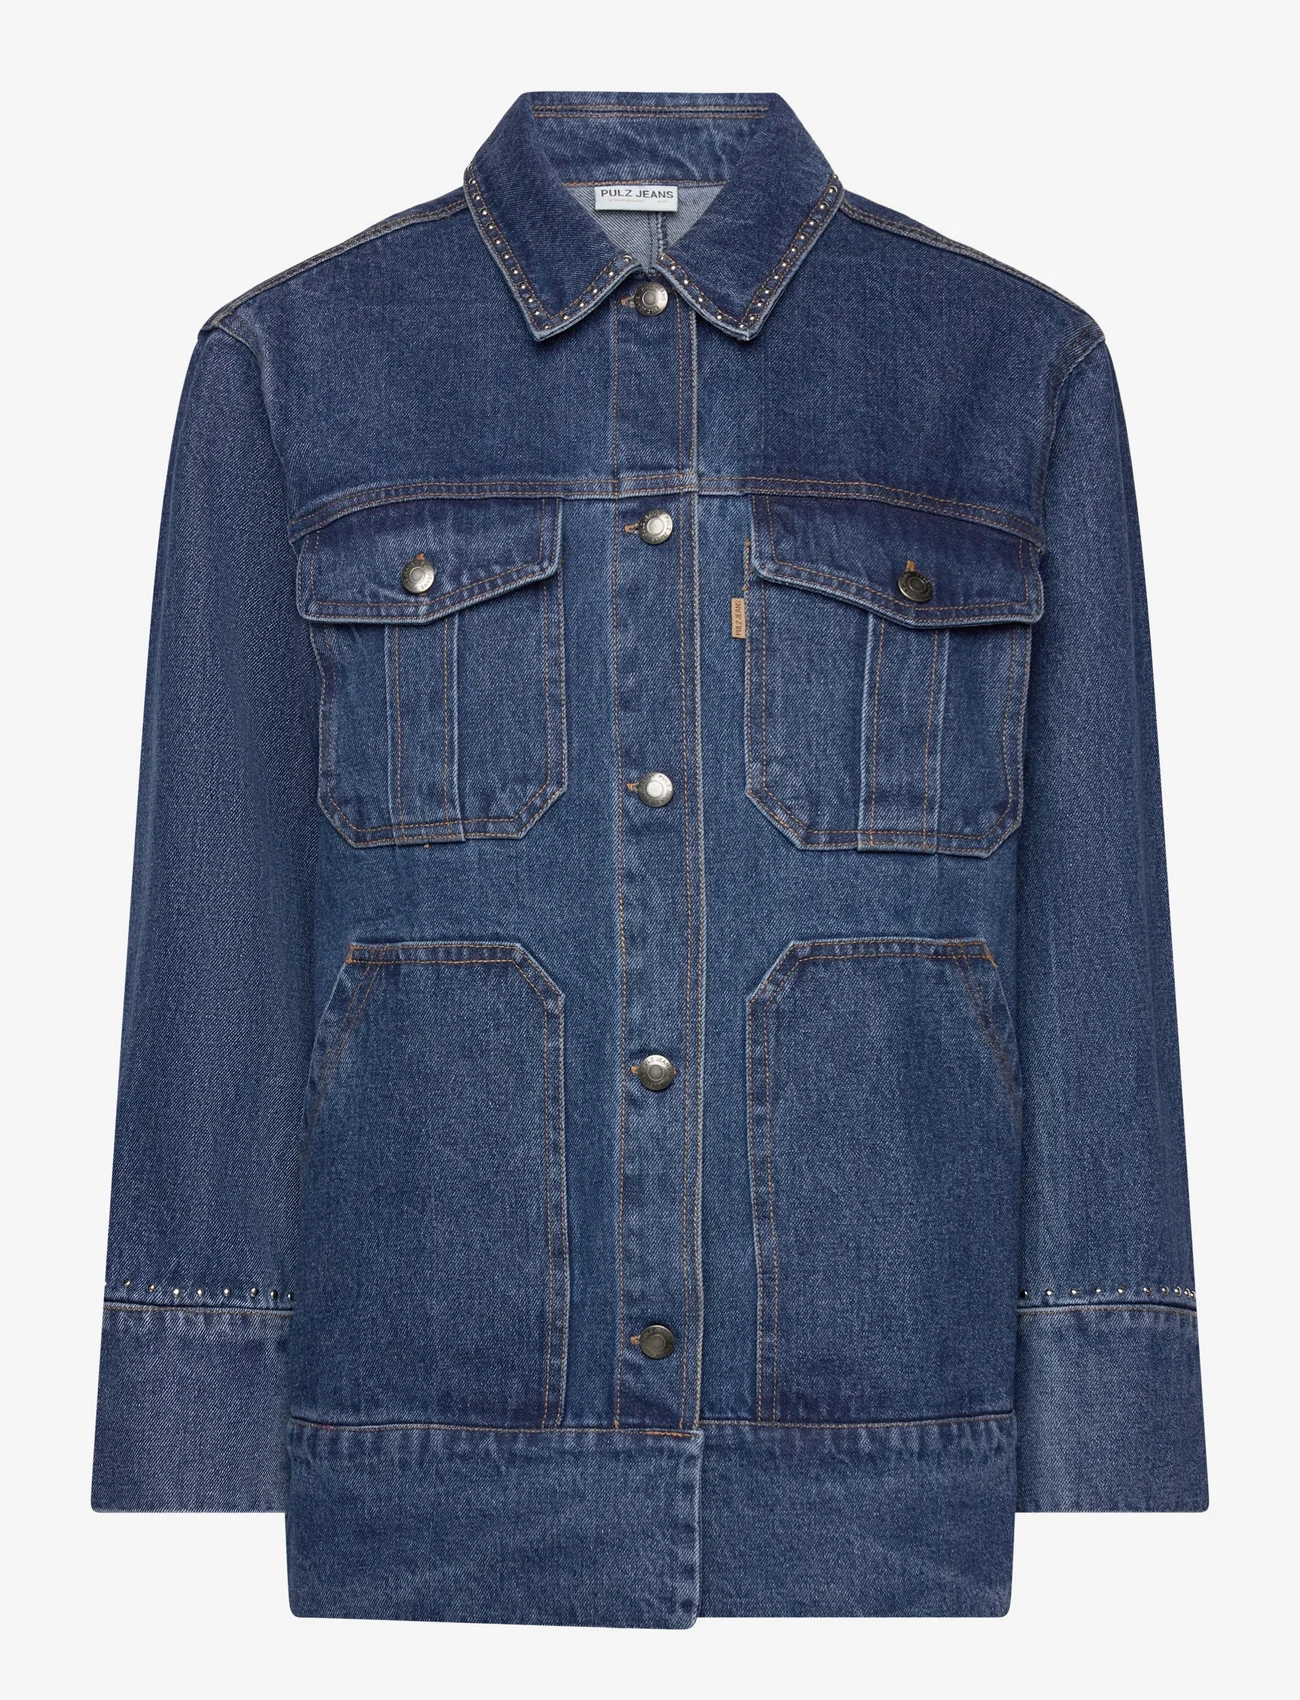 Pulz Jeans - PZRINA Denim Jacket - forårsjakker - medium blue denim - 0